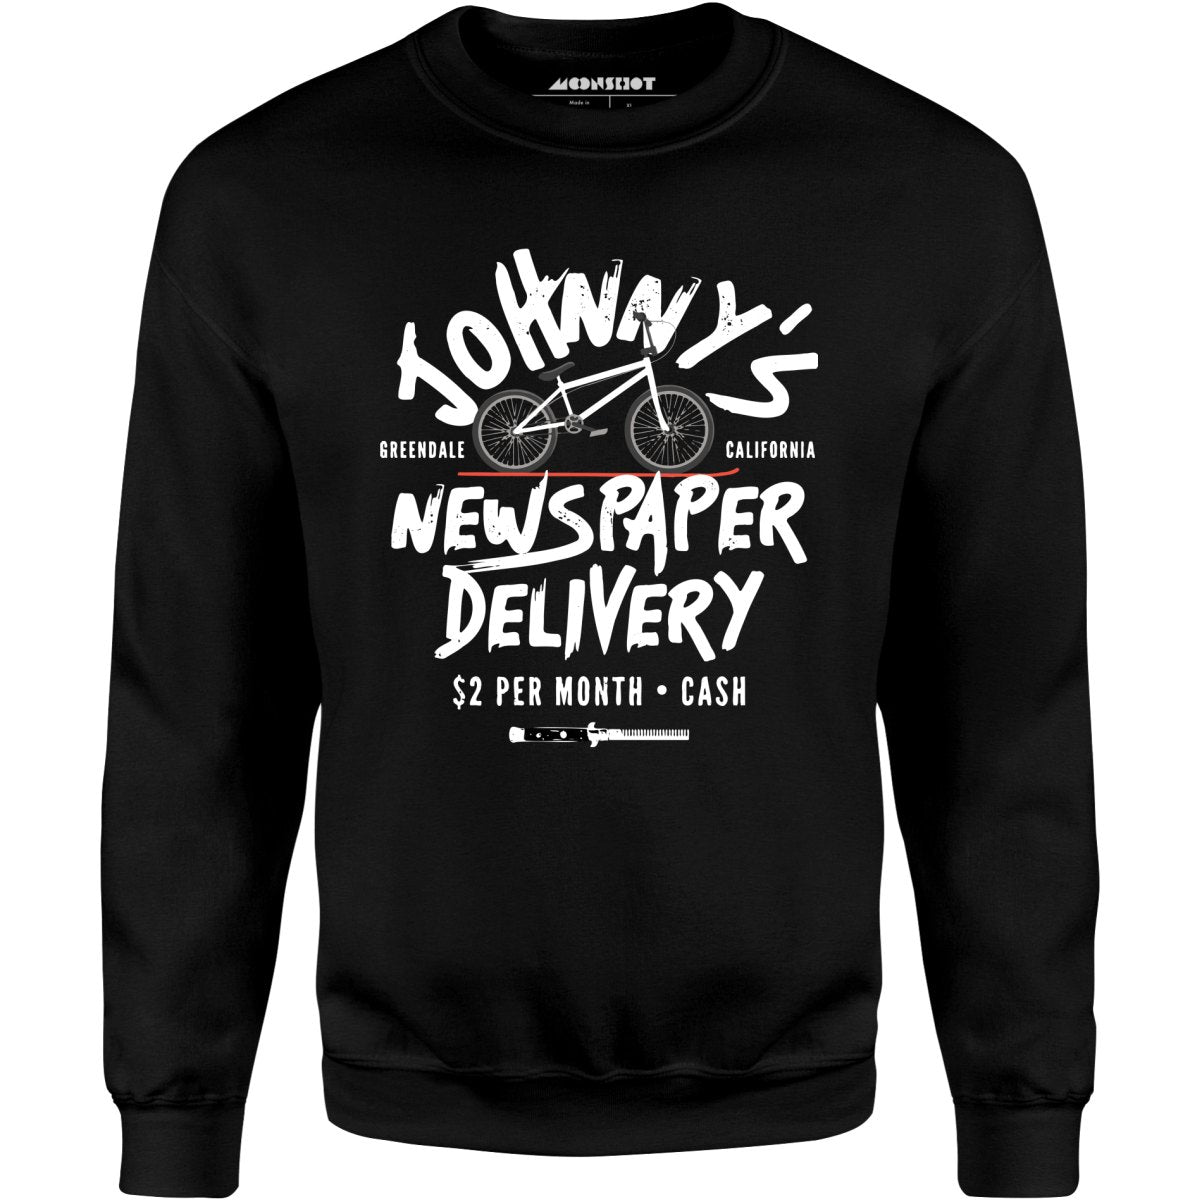 Johnny's Newspaper Delivery - Unisex Sweatshirt